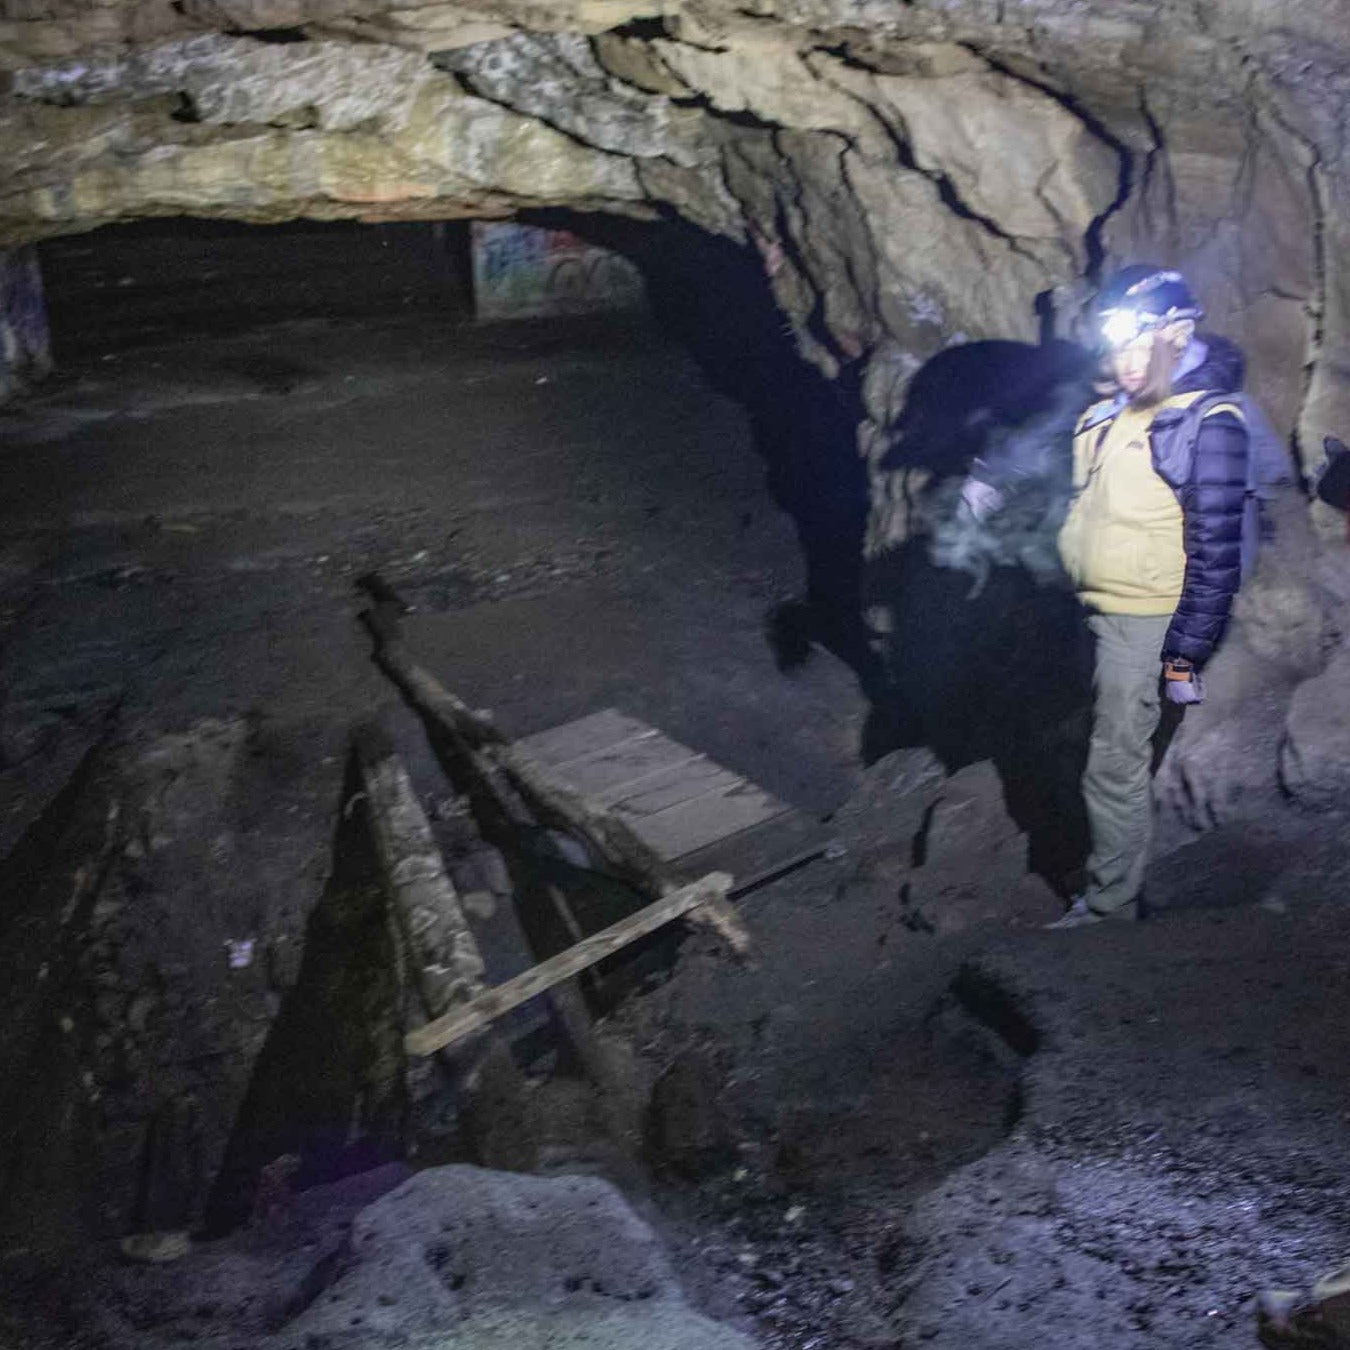 Hike Inside a Gigantic Abandoned Mine